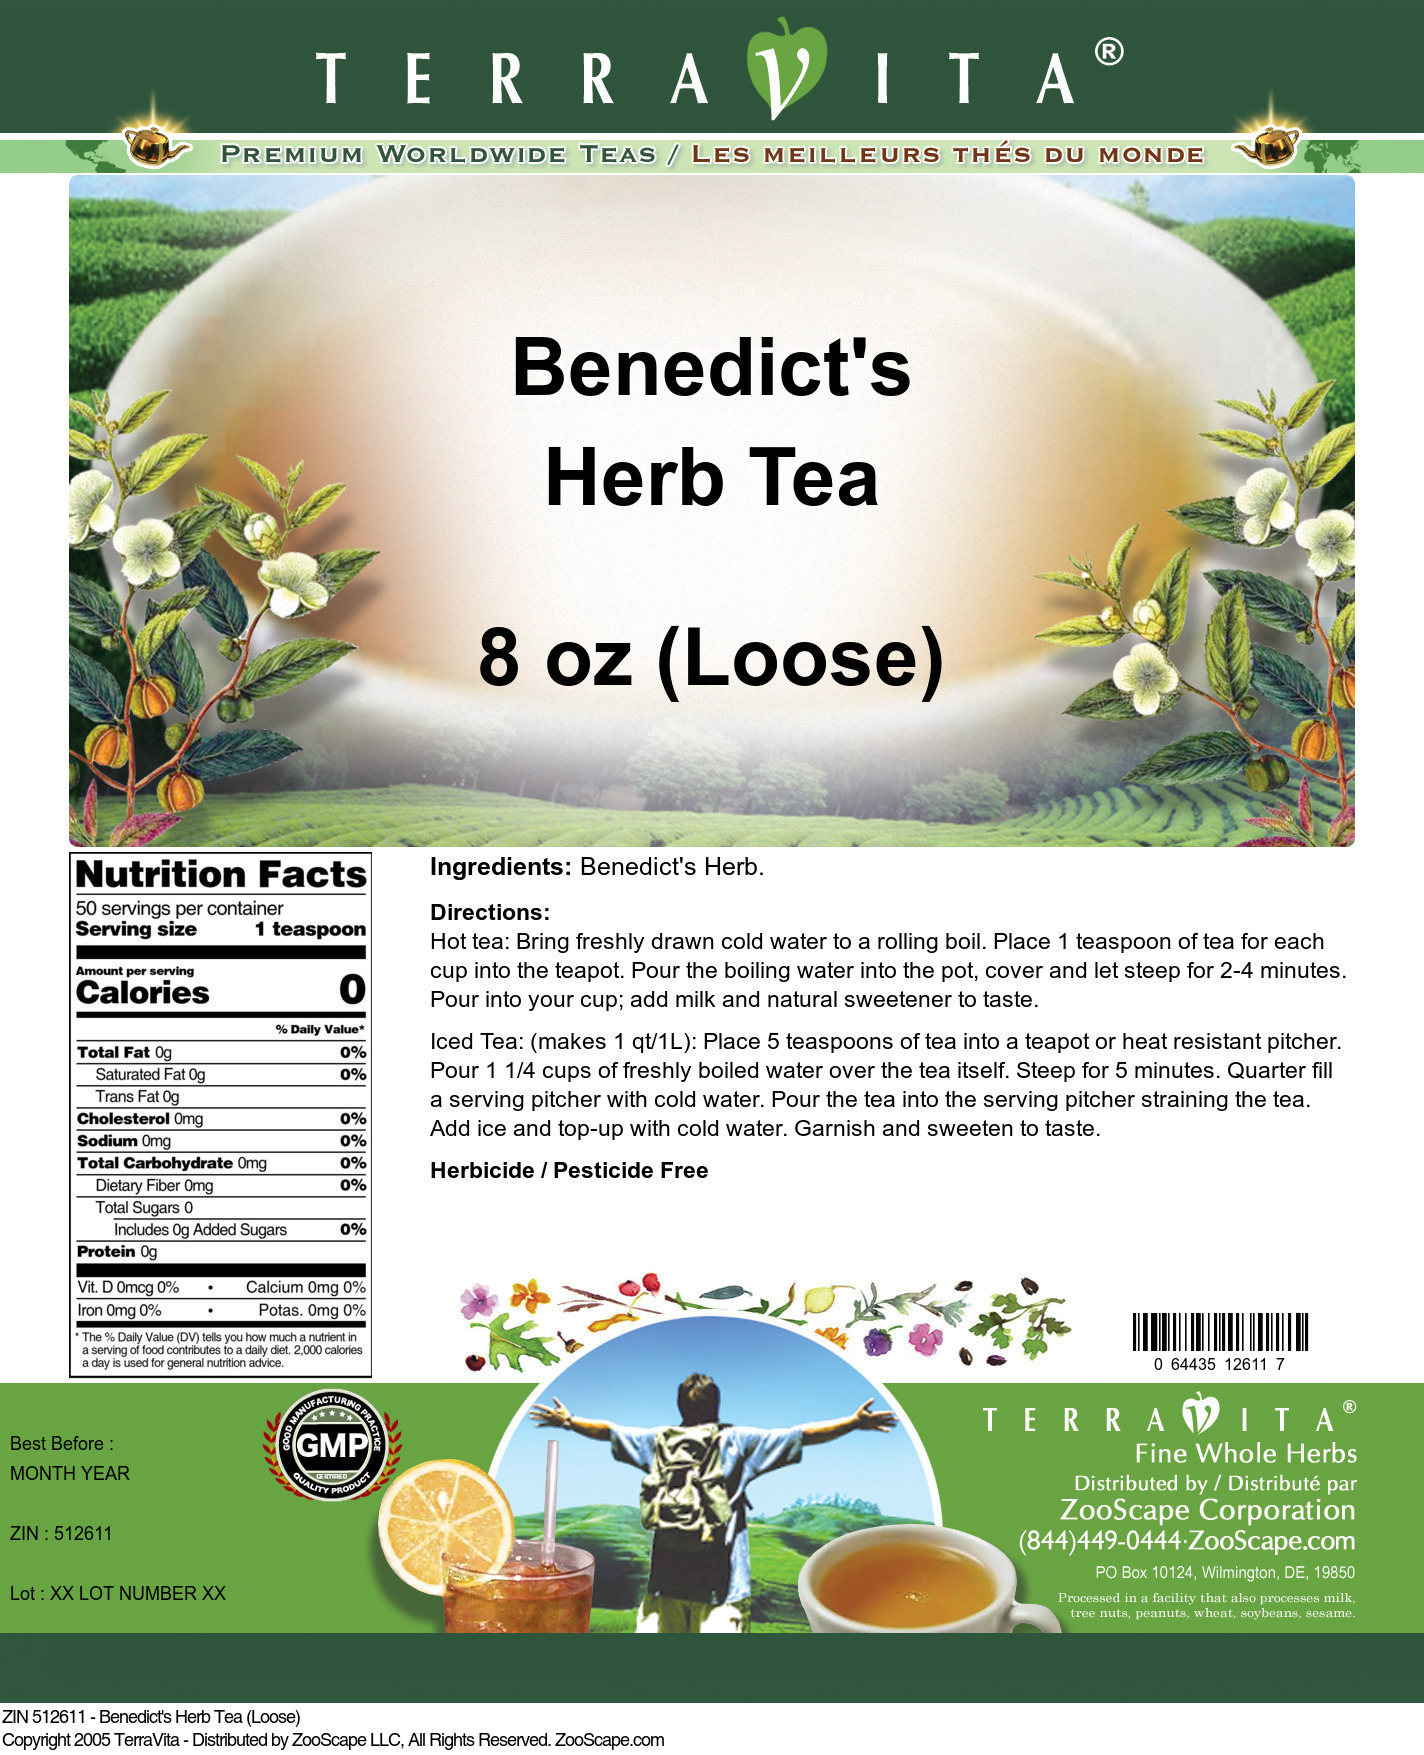 Benedict's Herb Tea (Loose) - Label